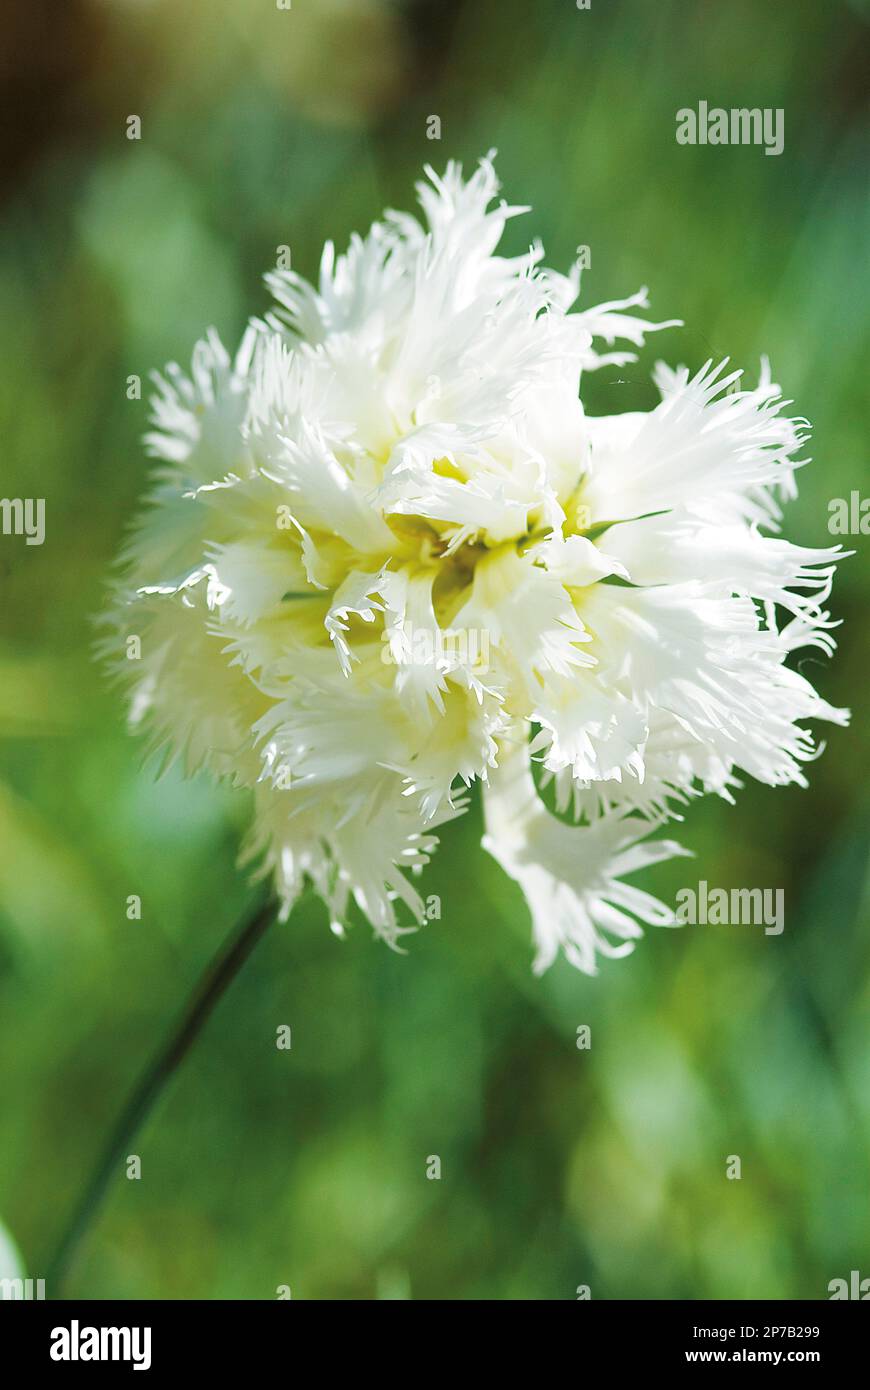 Dianthus Mrs Sinkins white perennial flower Stock Photo